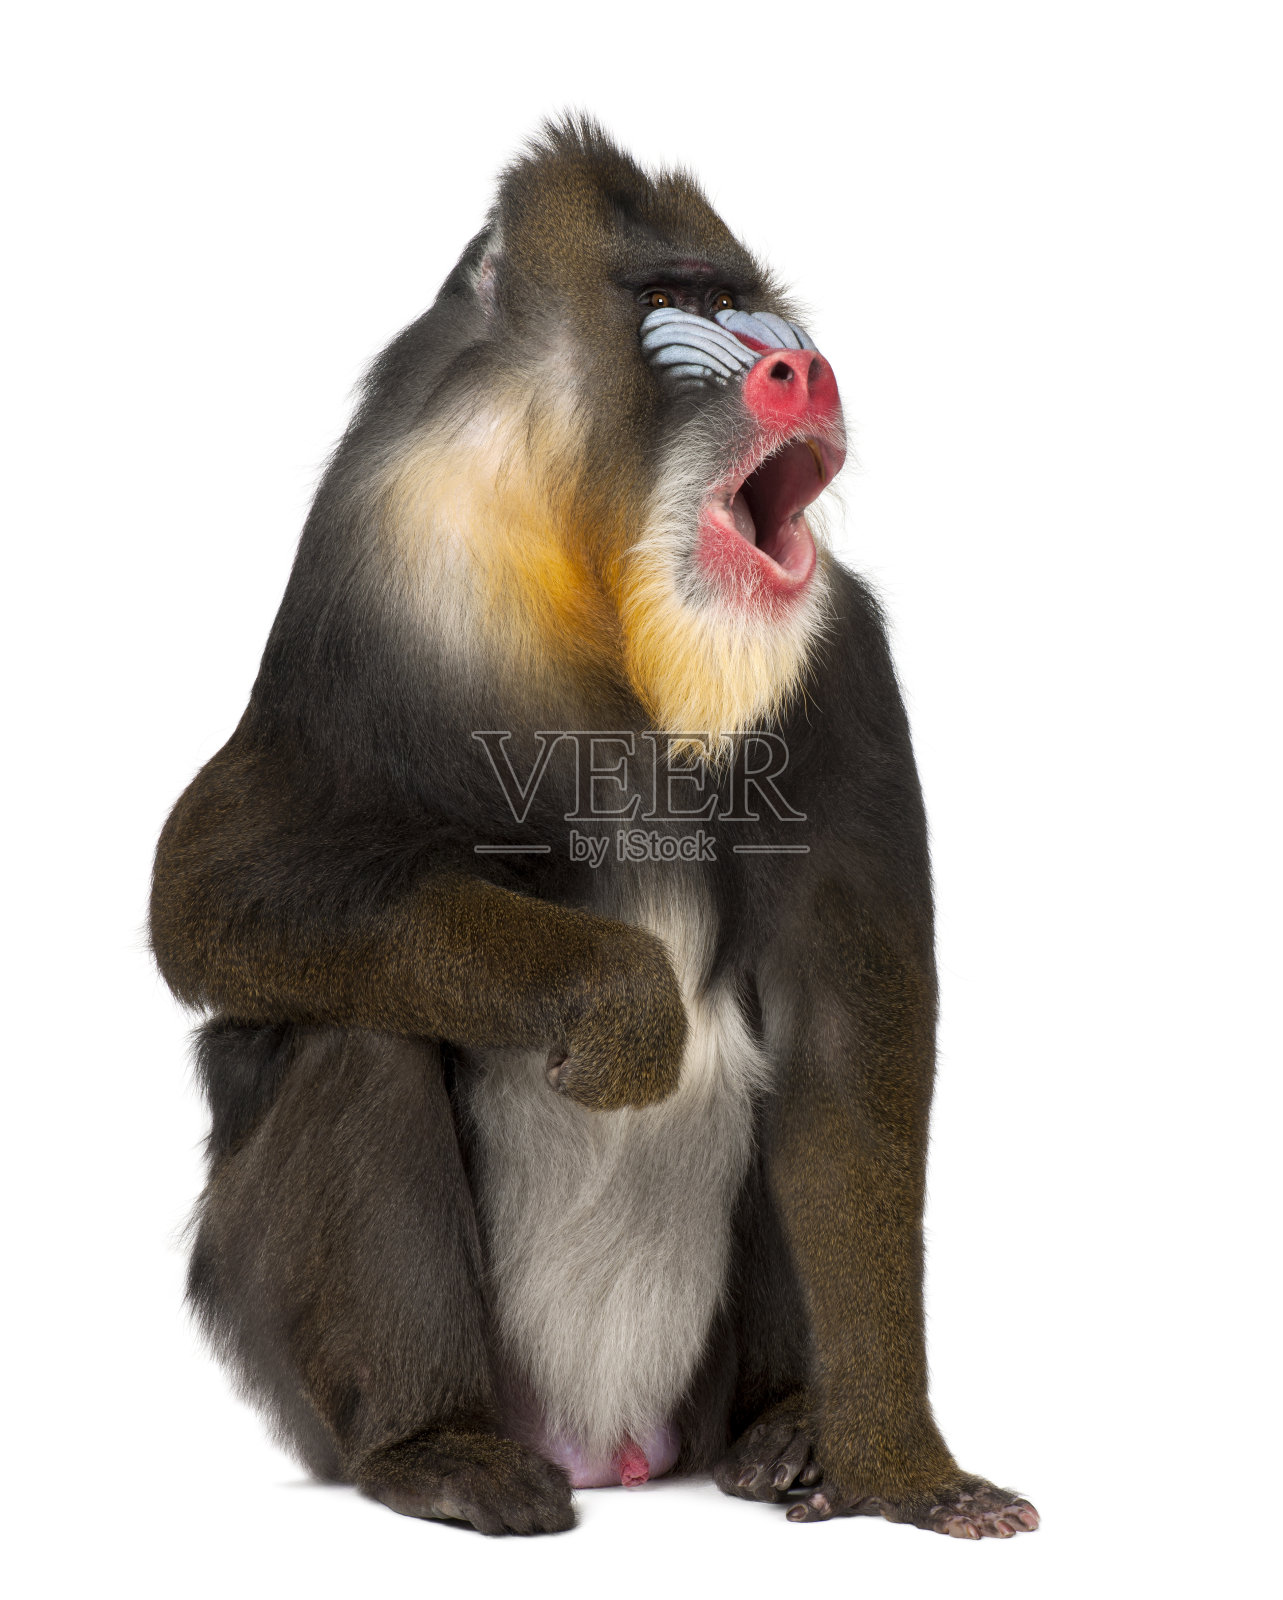 Mandrill坐着和叫喊——Mandrillus sphinx(22岁)是一种旧世界的灵长类猴子照片摄影图片